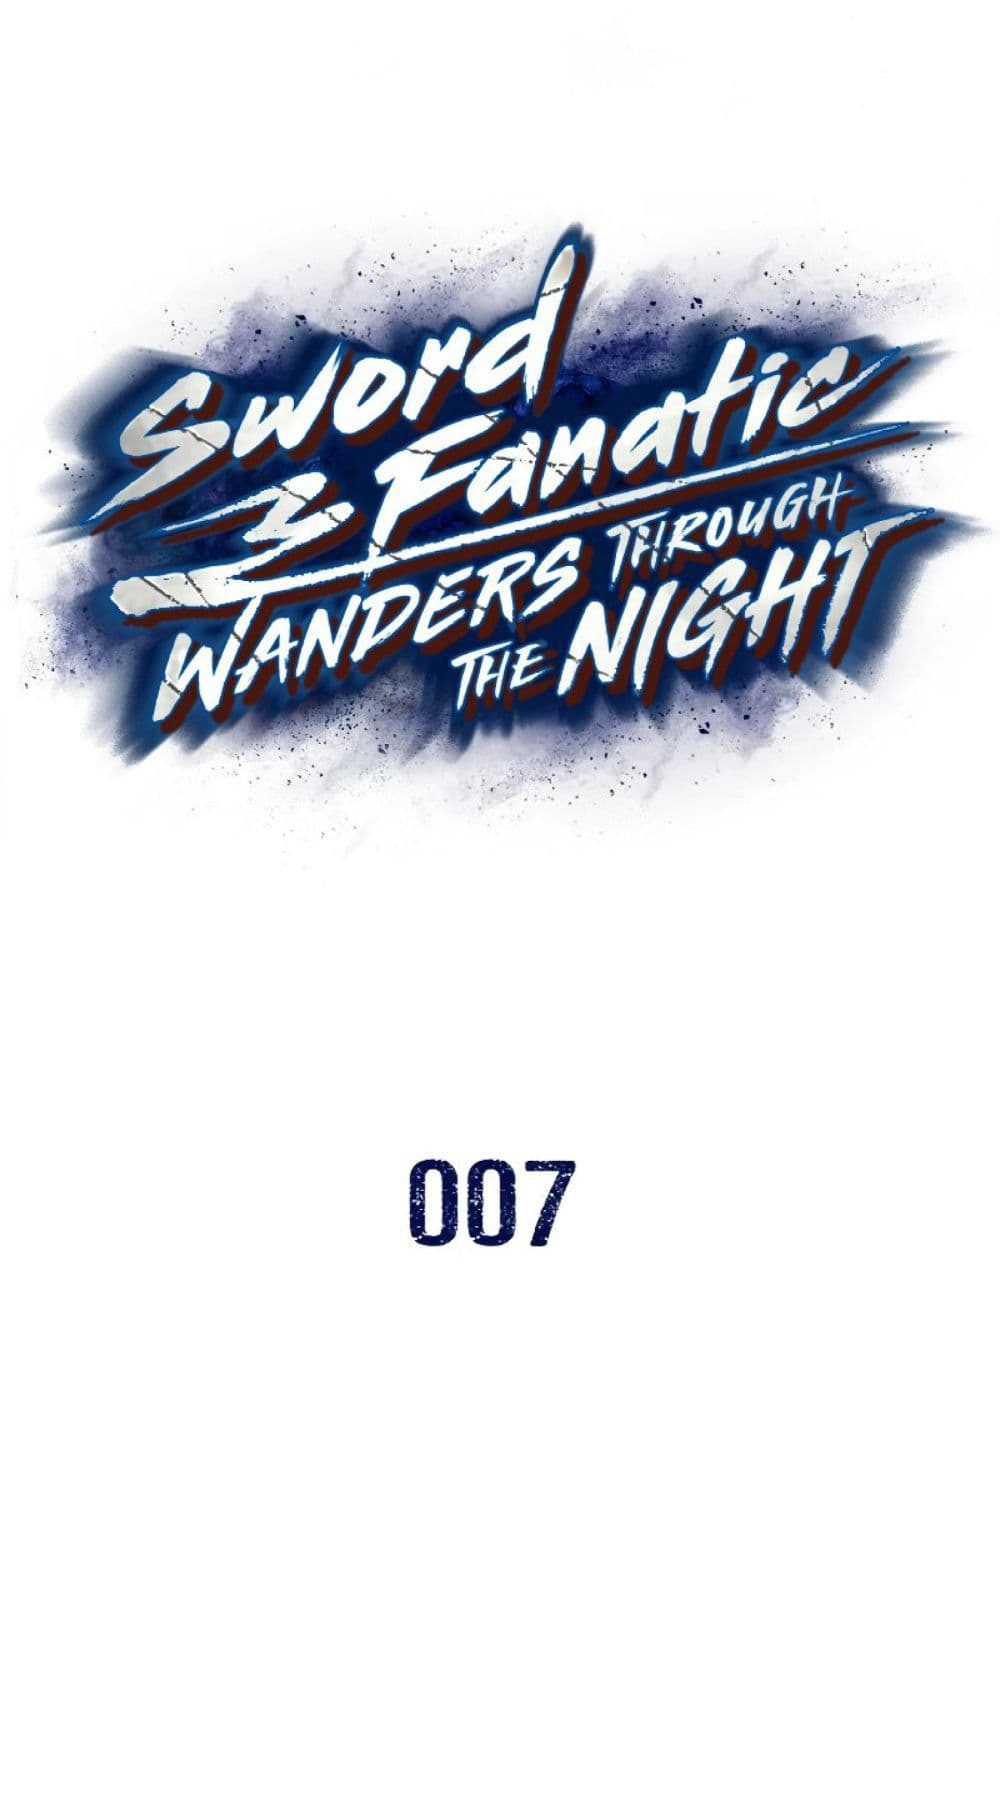 Sword Fanatic Wanders Through The Night 7-7